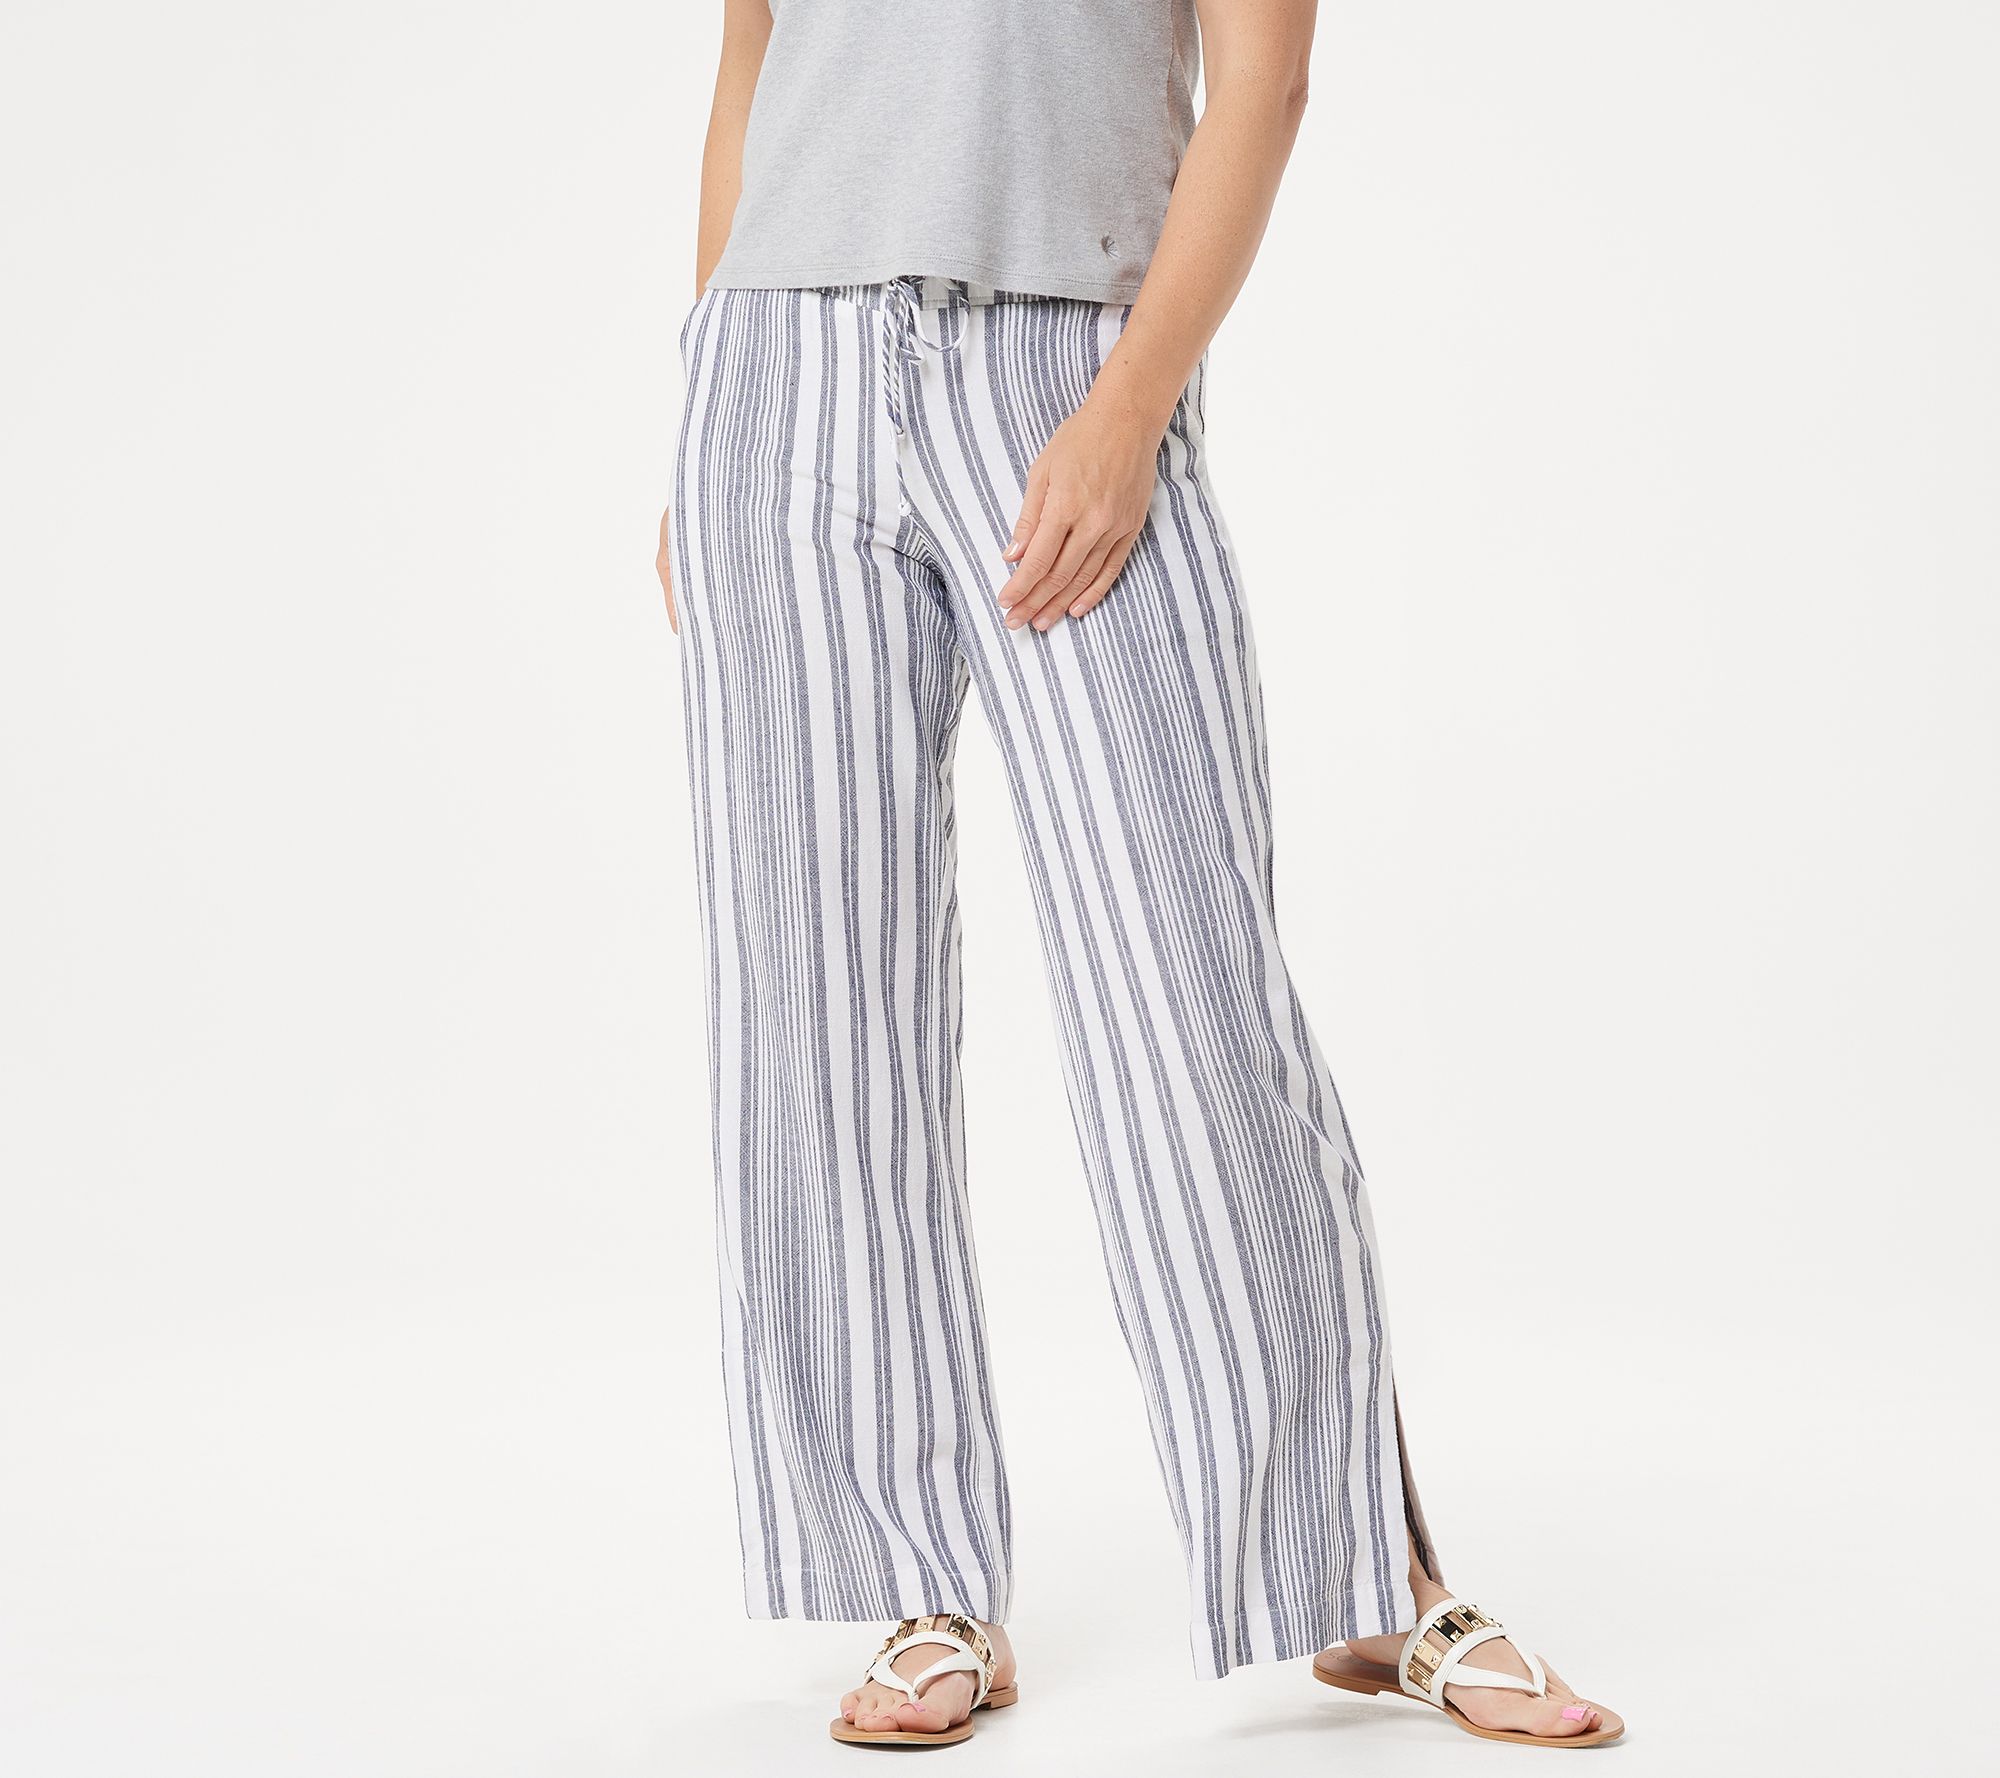 Linen-blend Pull-on Pants - White/blue striped - Ladies